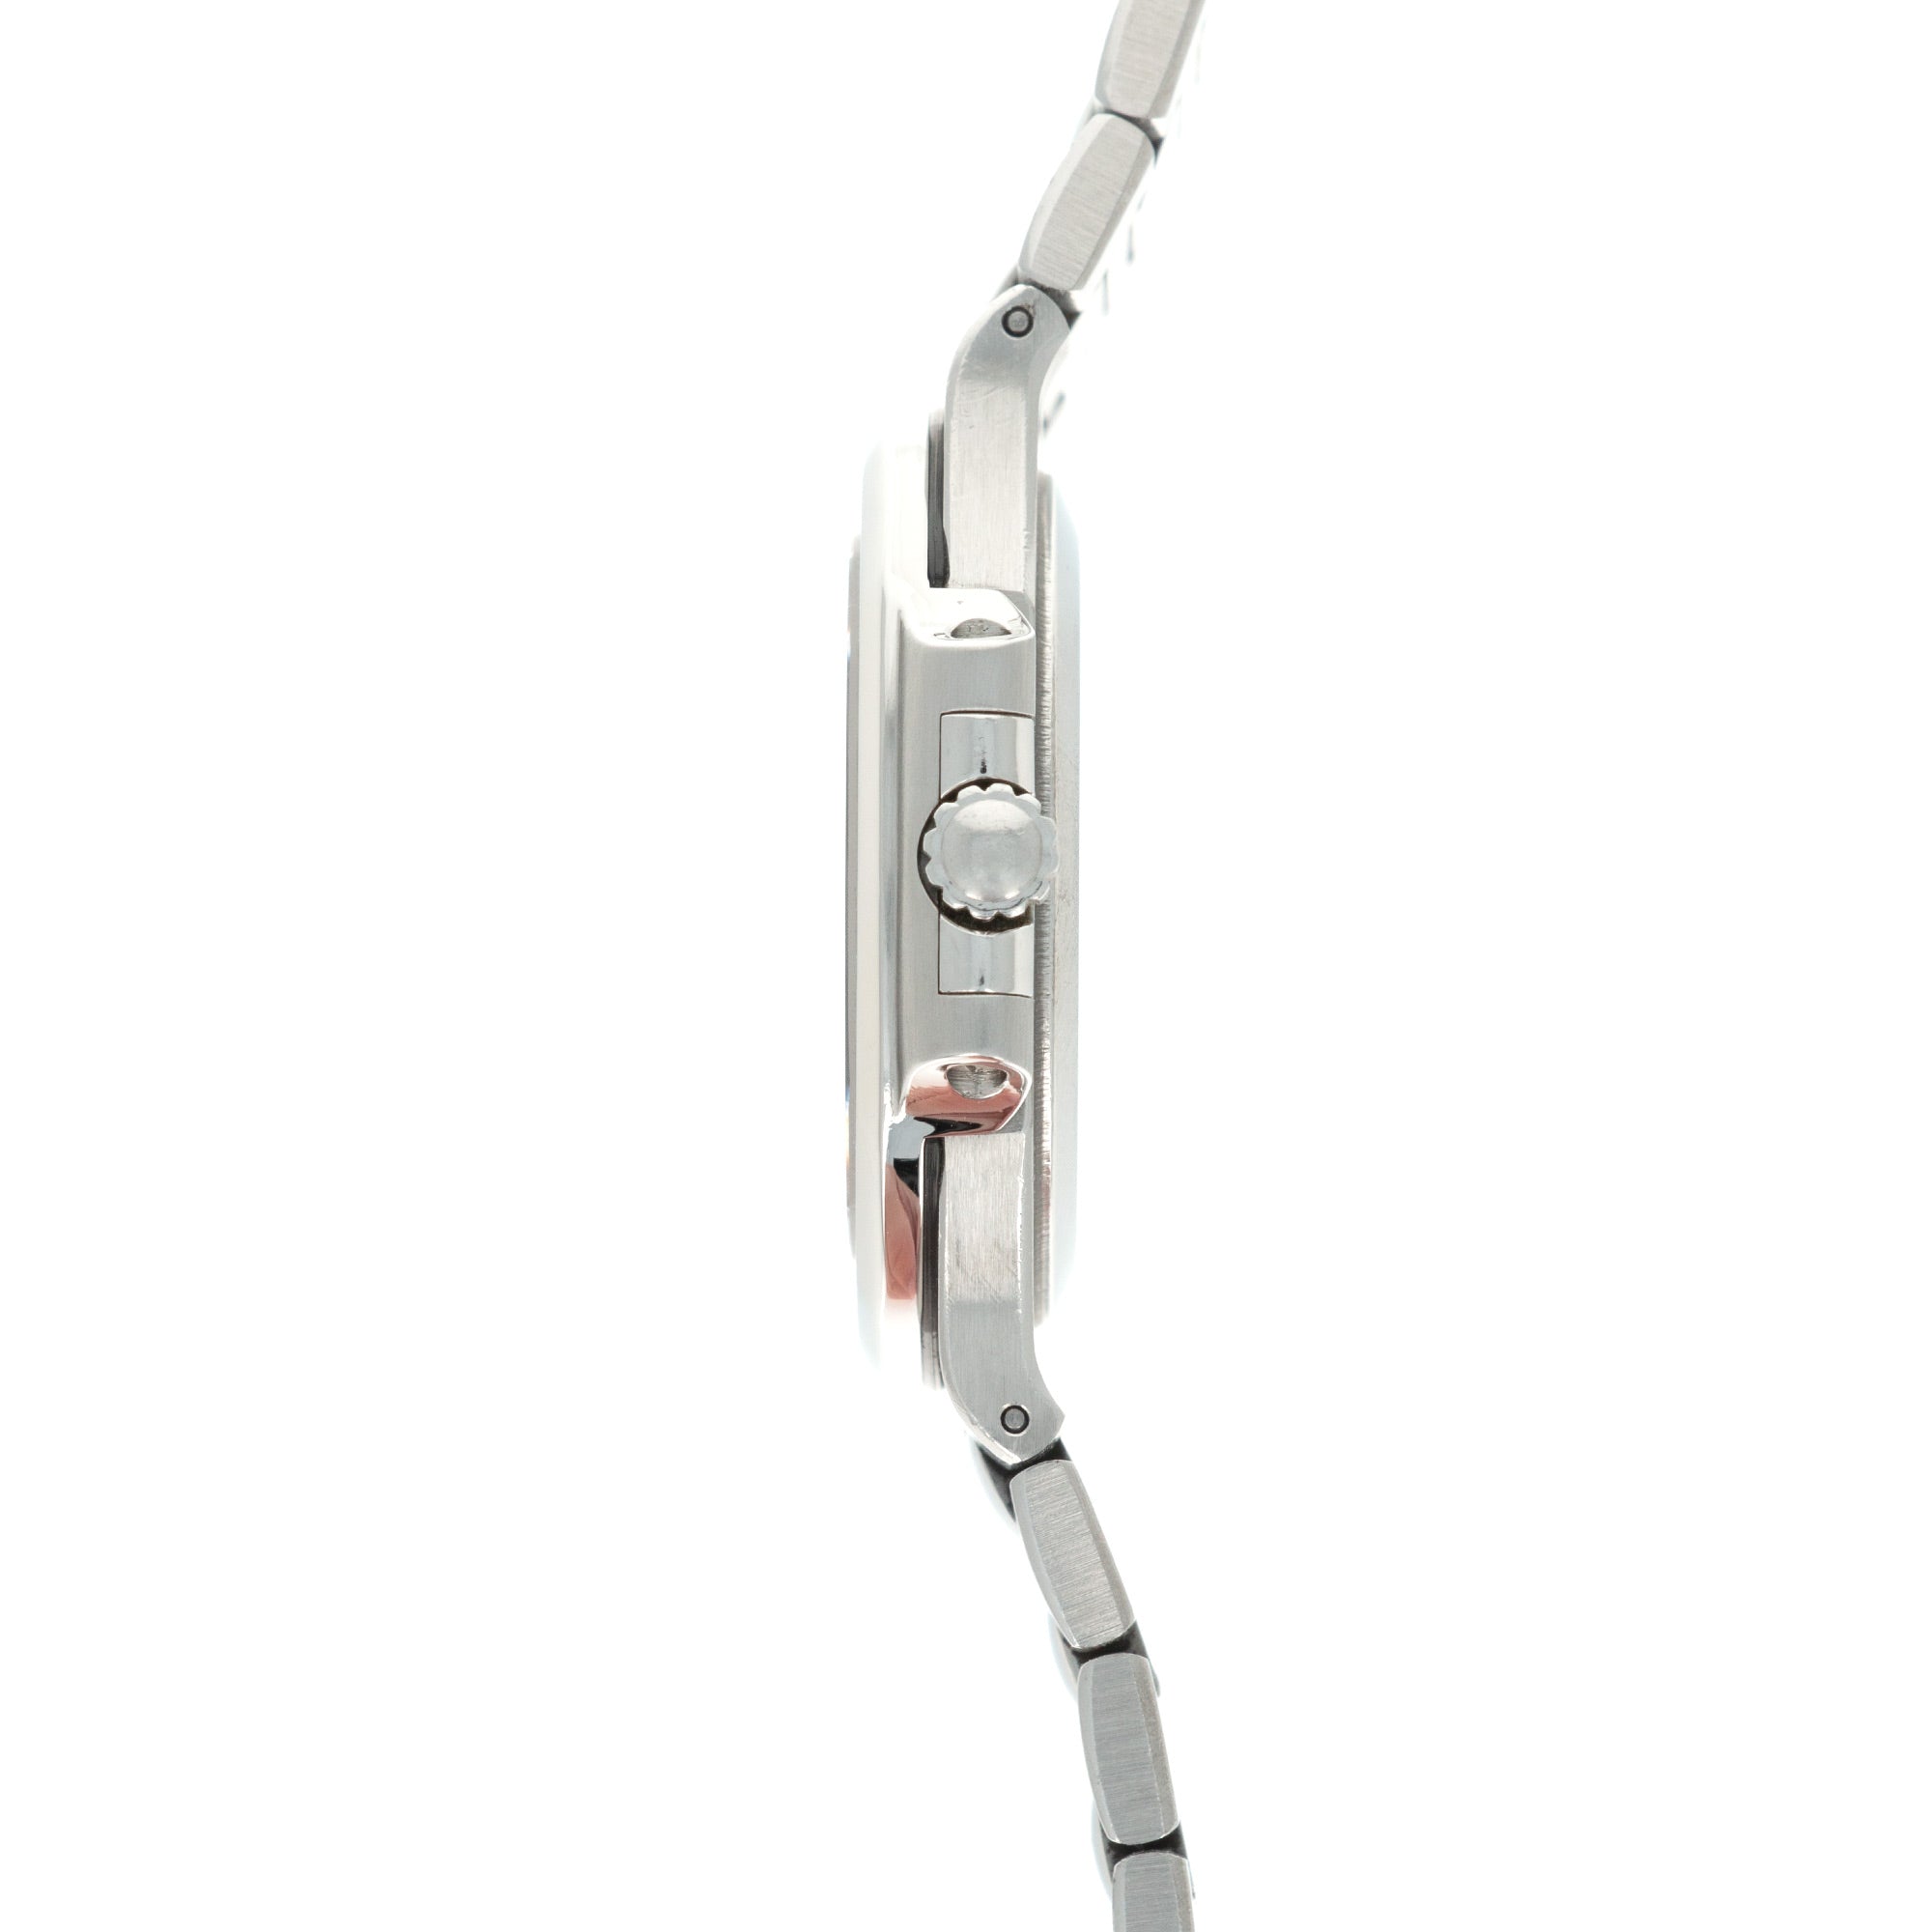 Patek Philippe - Patek Philippe Steel Nautilus Ref. 3800 with White Dial - The Keystone Watches